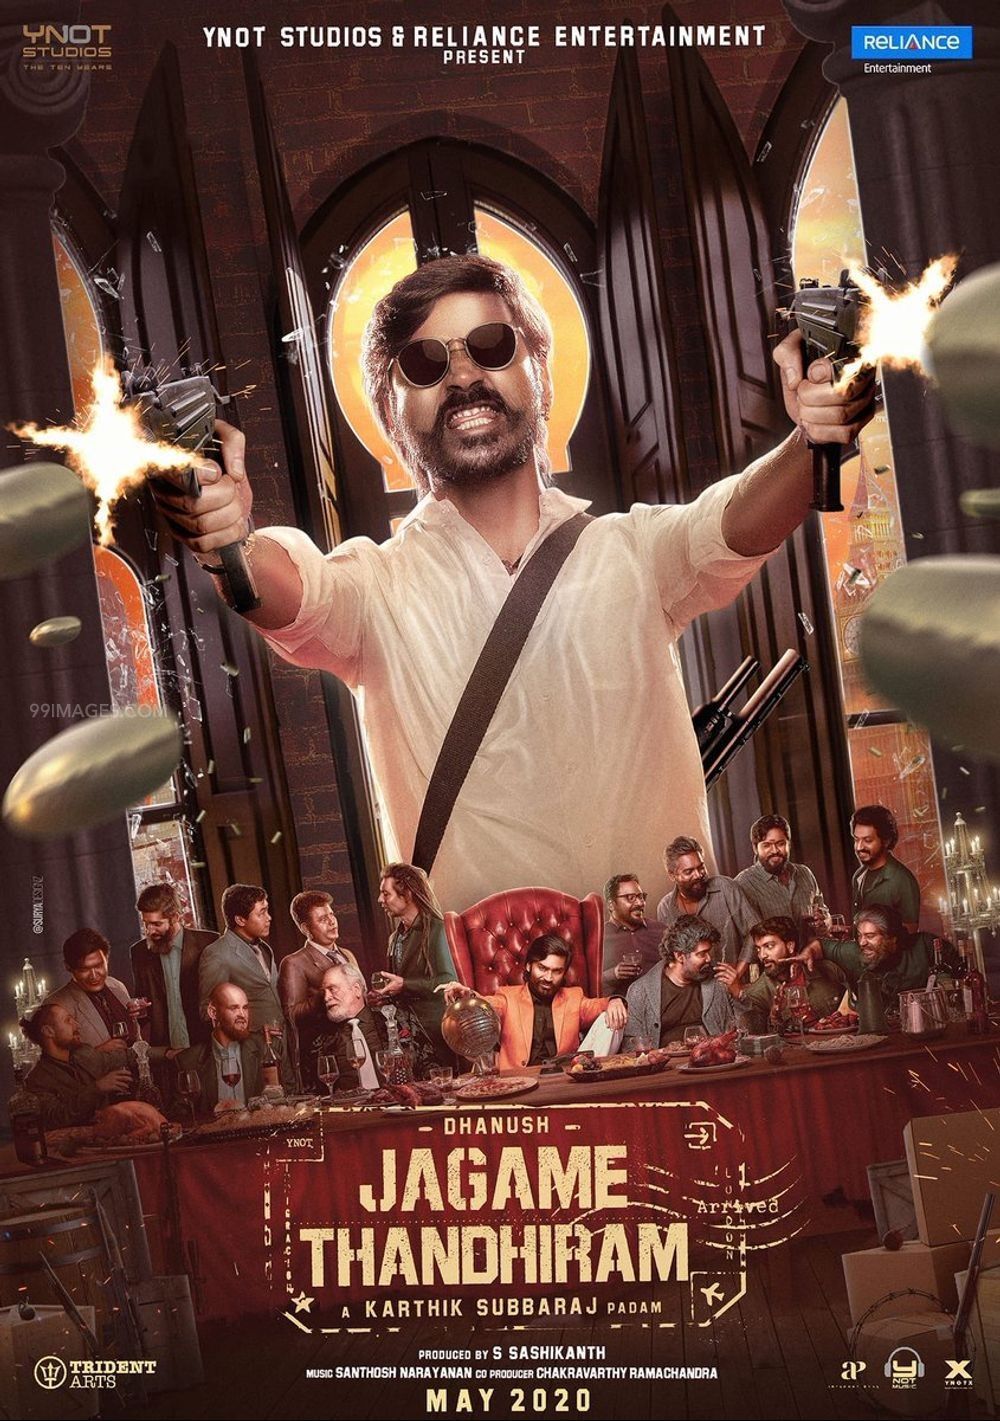 Jagame Thandhiram Image, HD Photo (1080p), Wallpaper (Android IPhone) (2020)